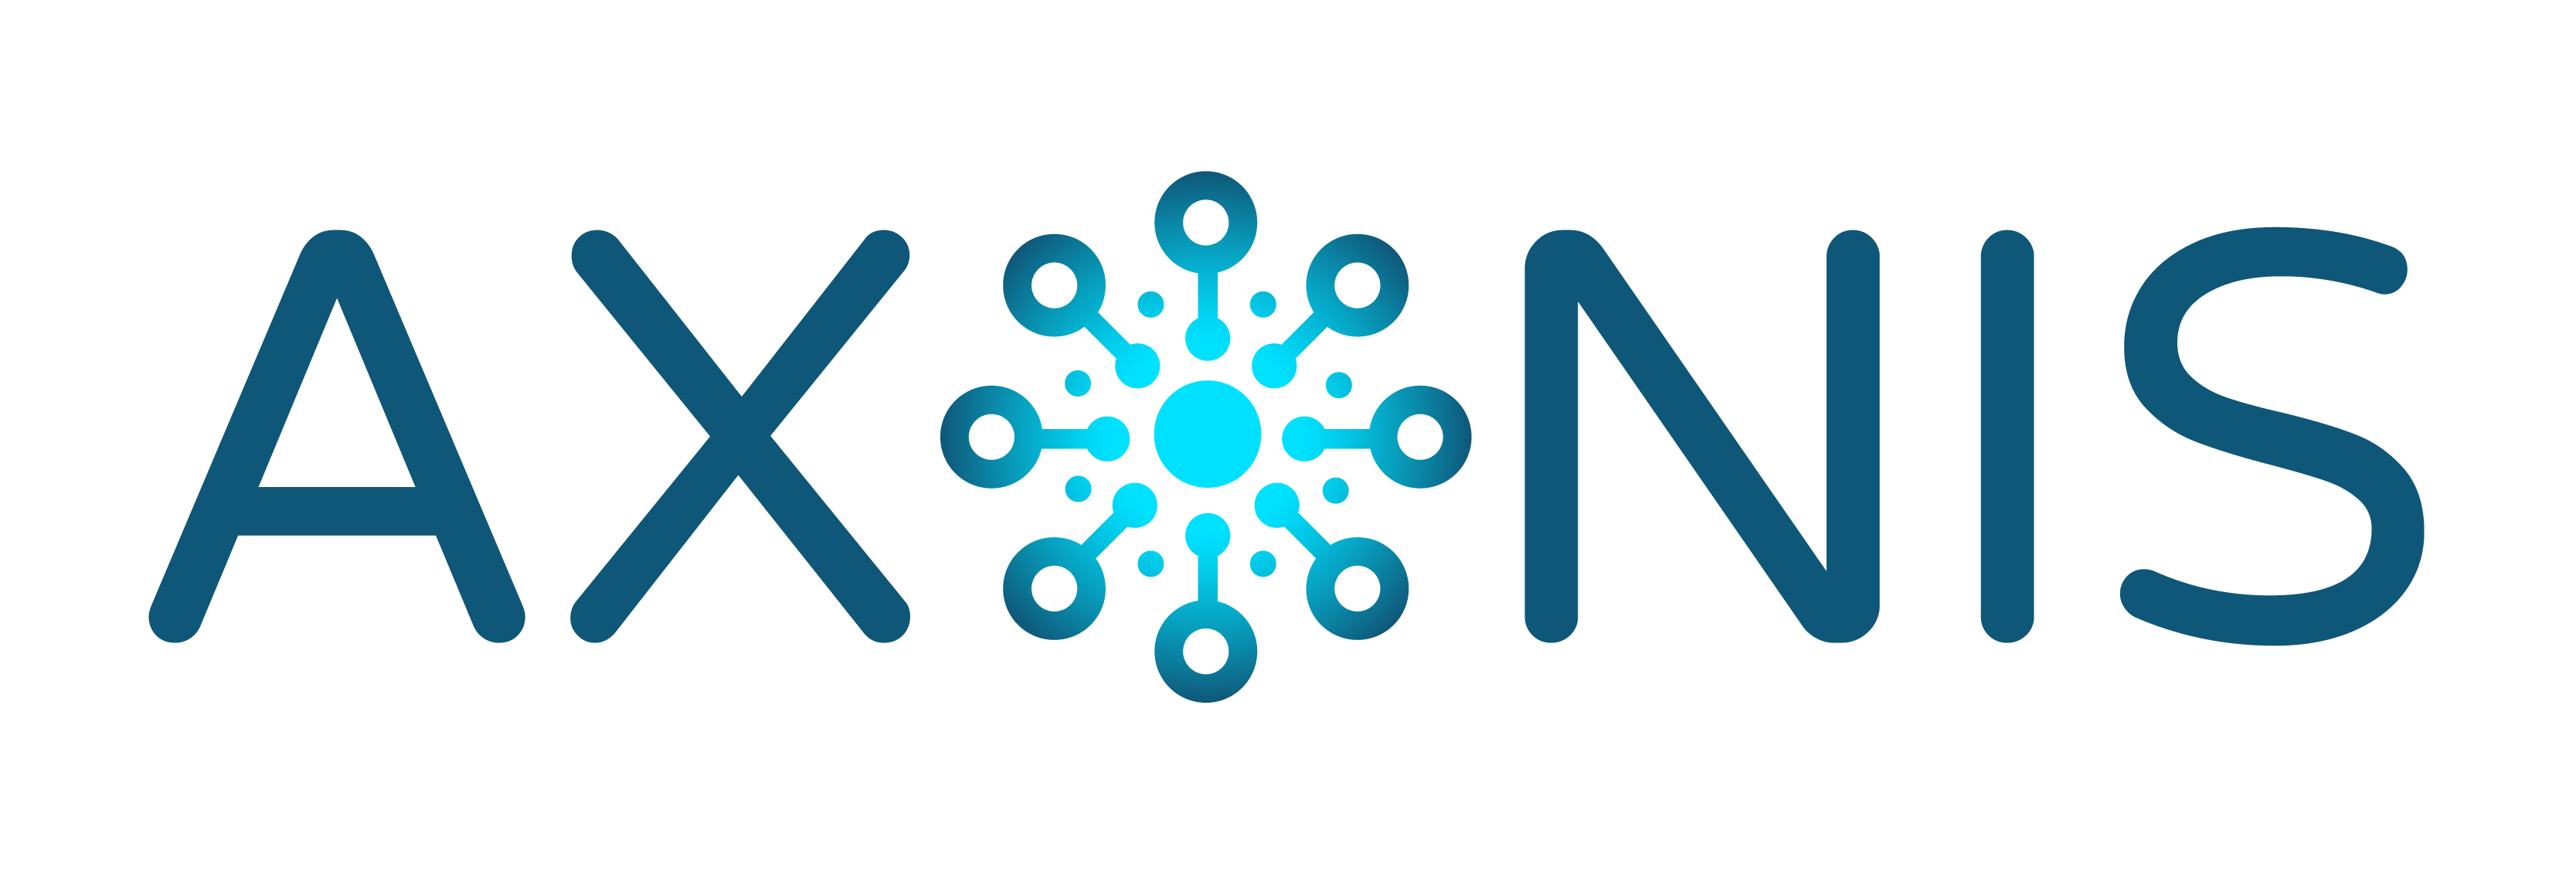 Axonis Logo